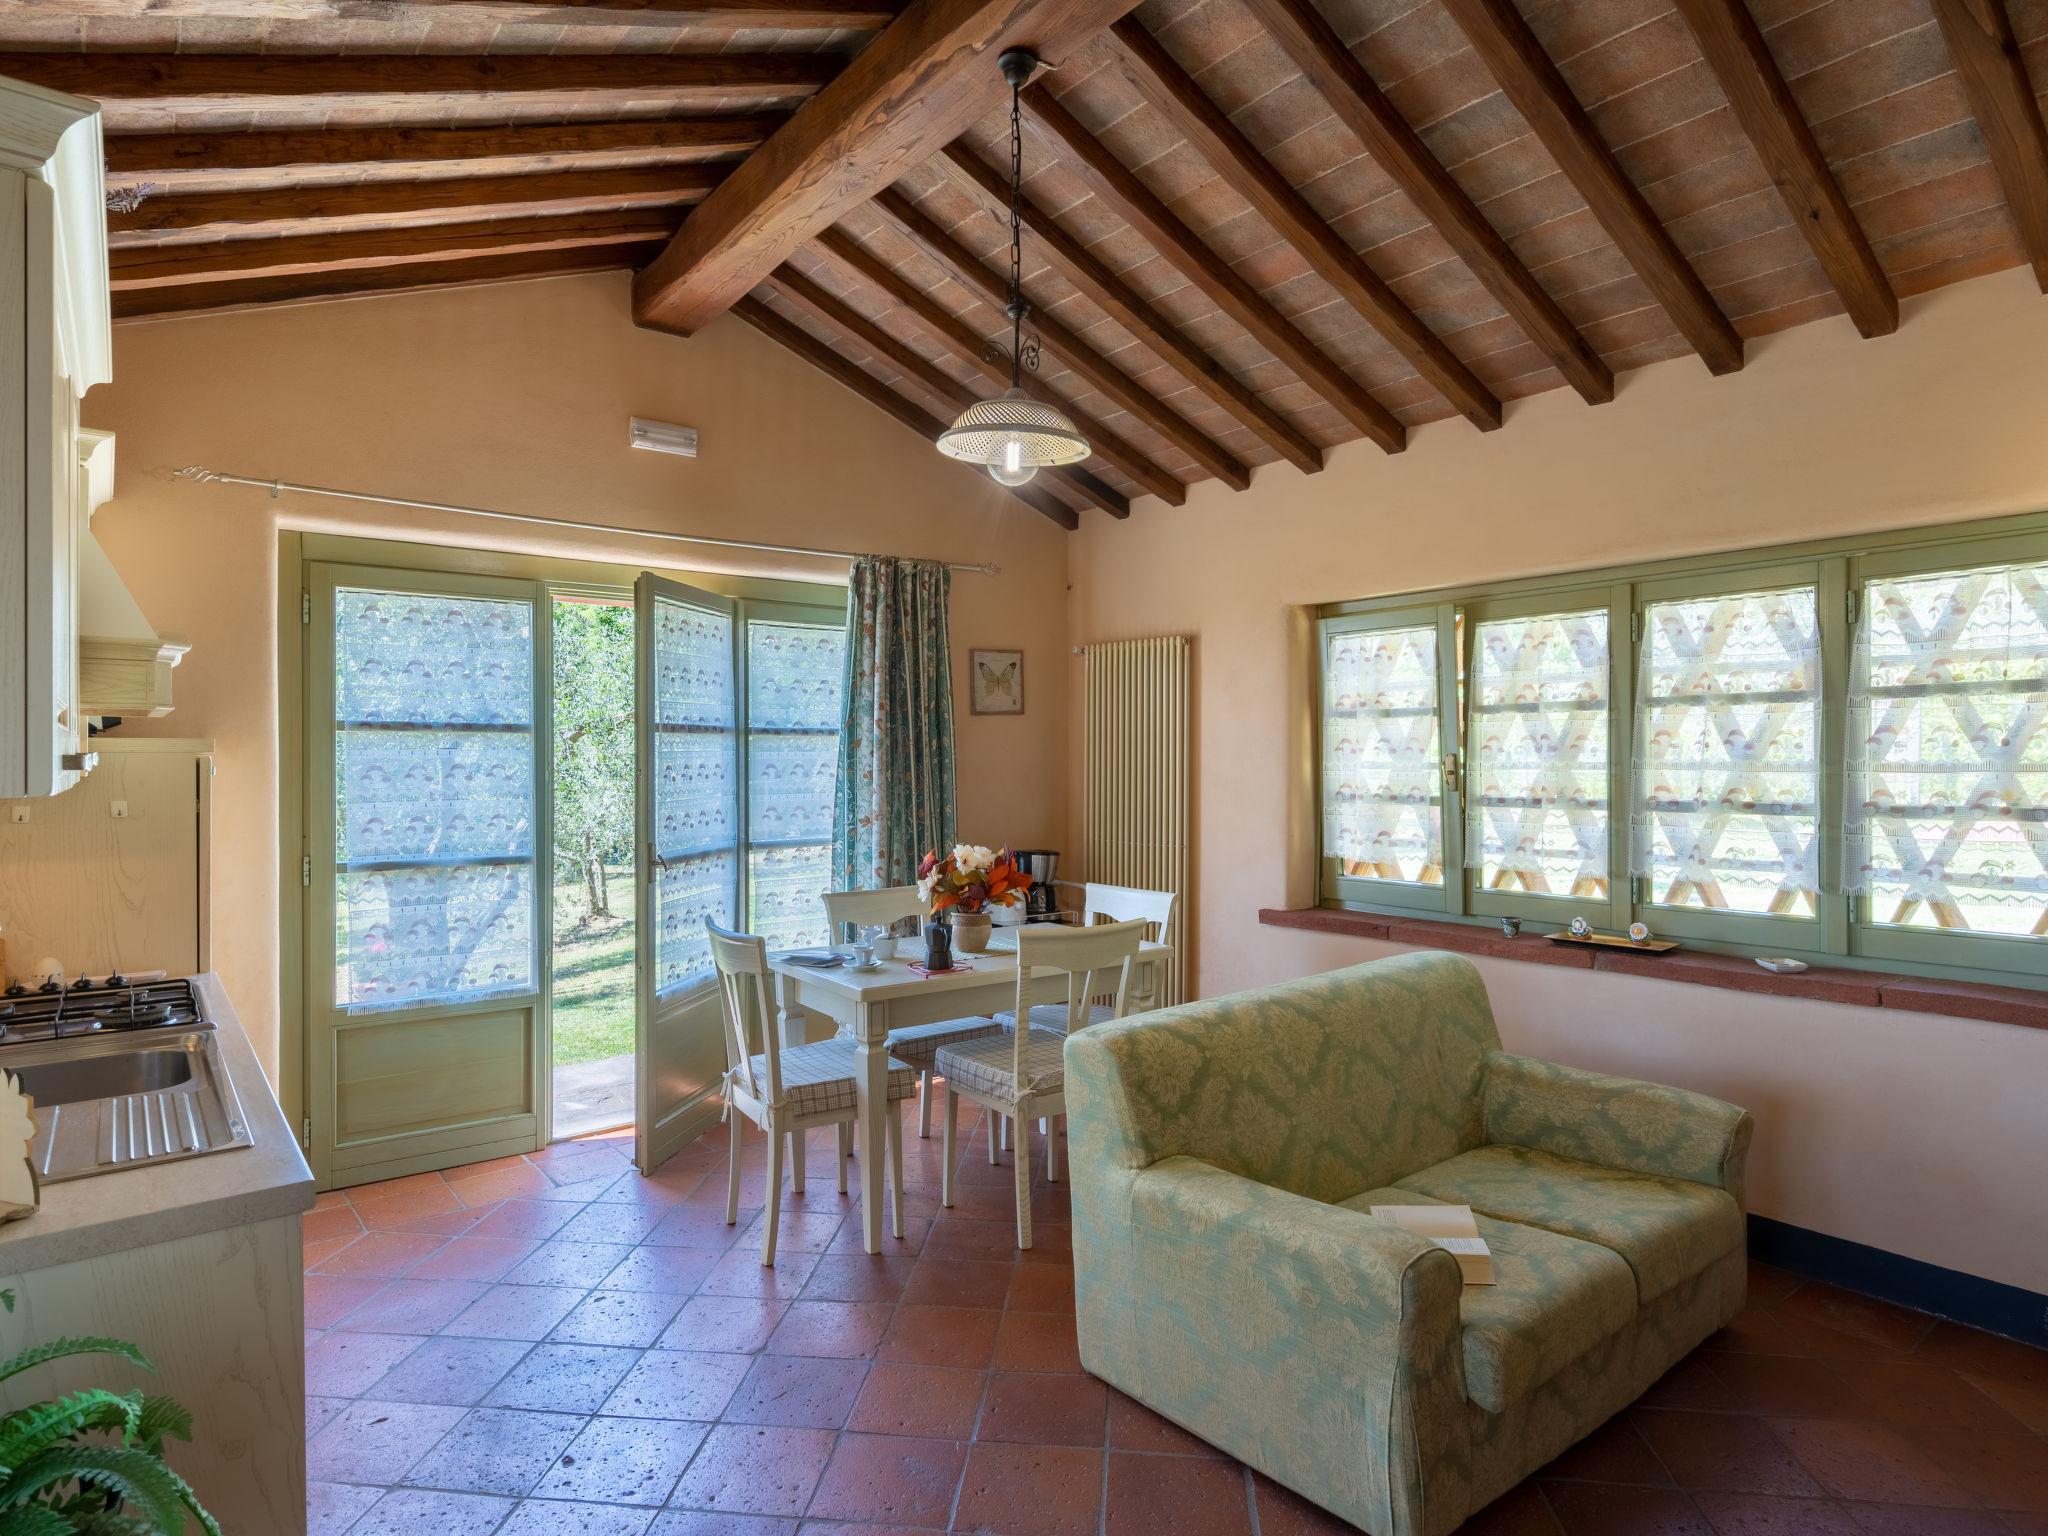 Photo 5 - 1 bedroom House in Castiglion Fiorentino with private pool and garden